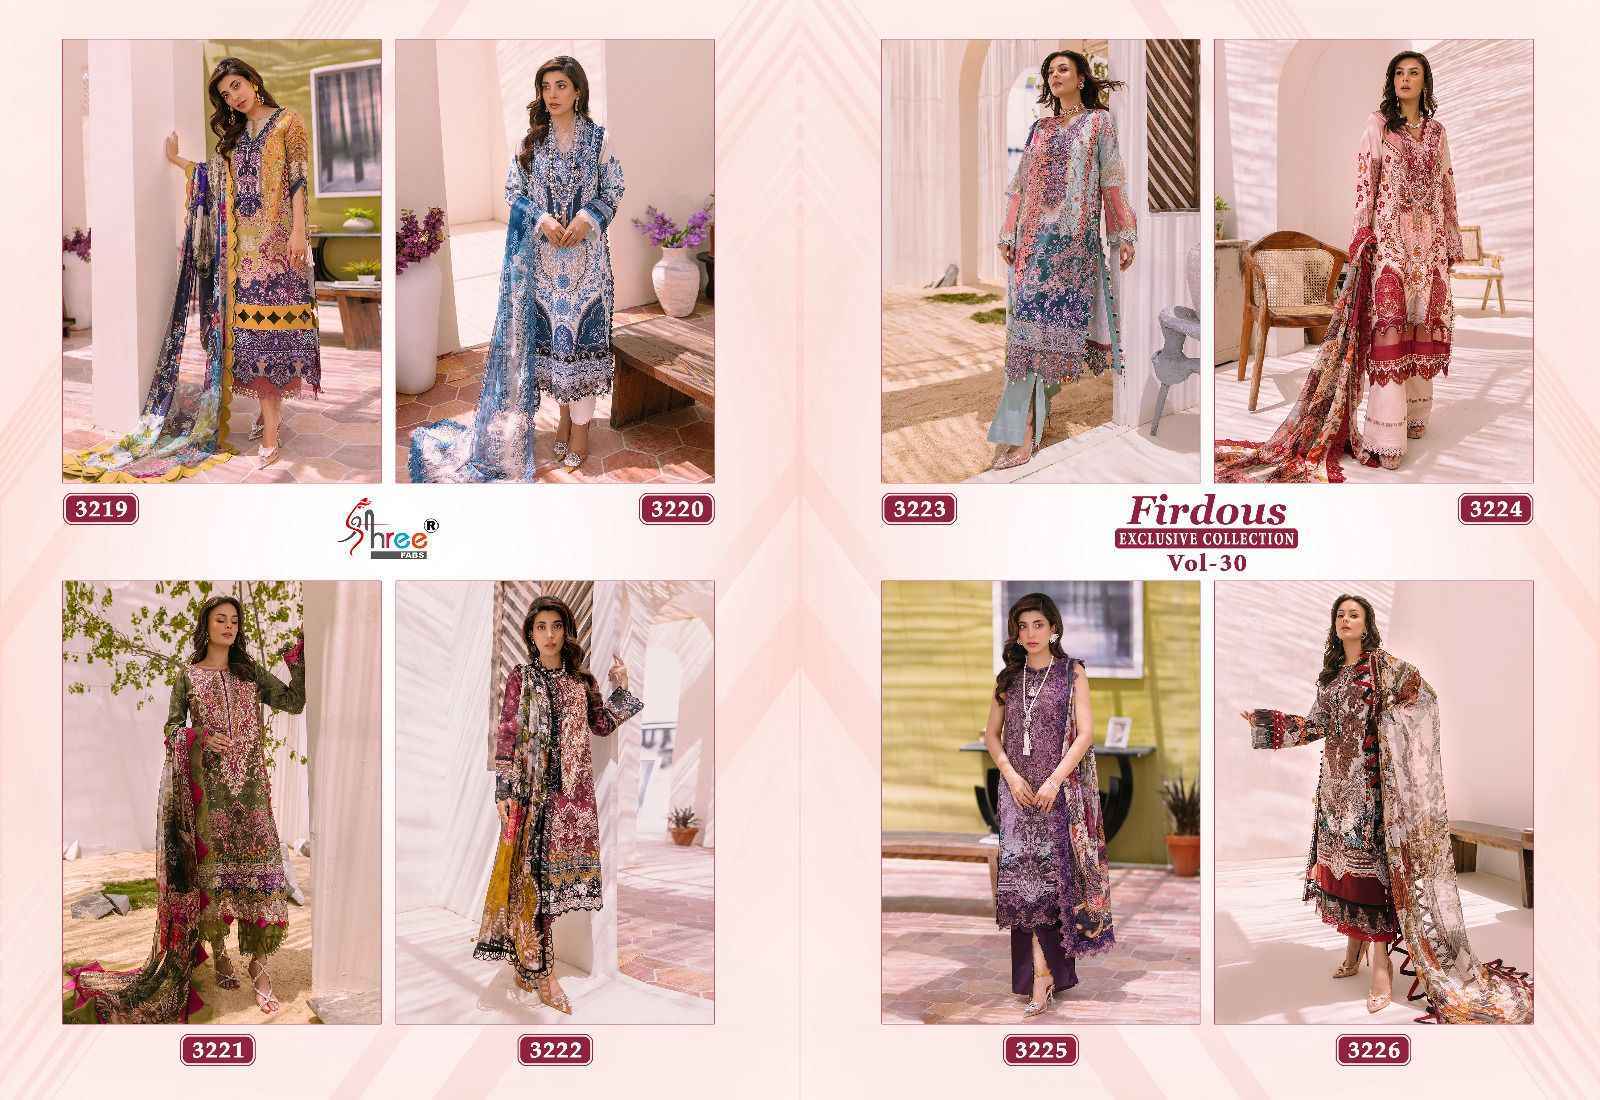 Shree Fabs Firdous Exclusive Collection Vol 30 Cotton Dress Material 8 pcs Catalogue